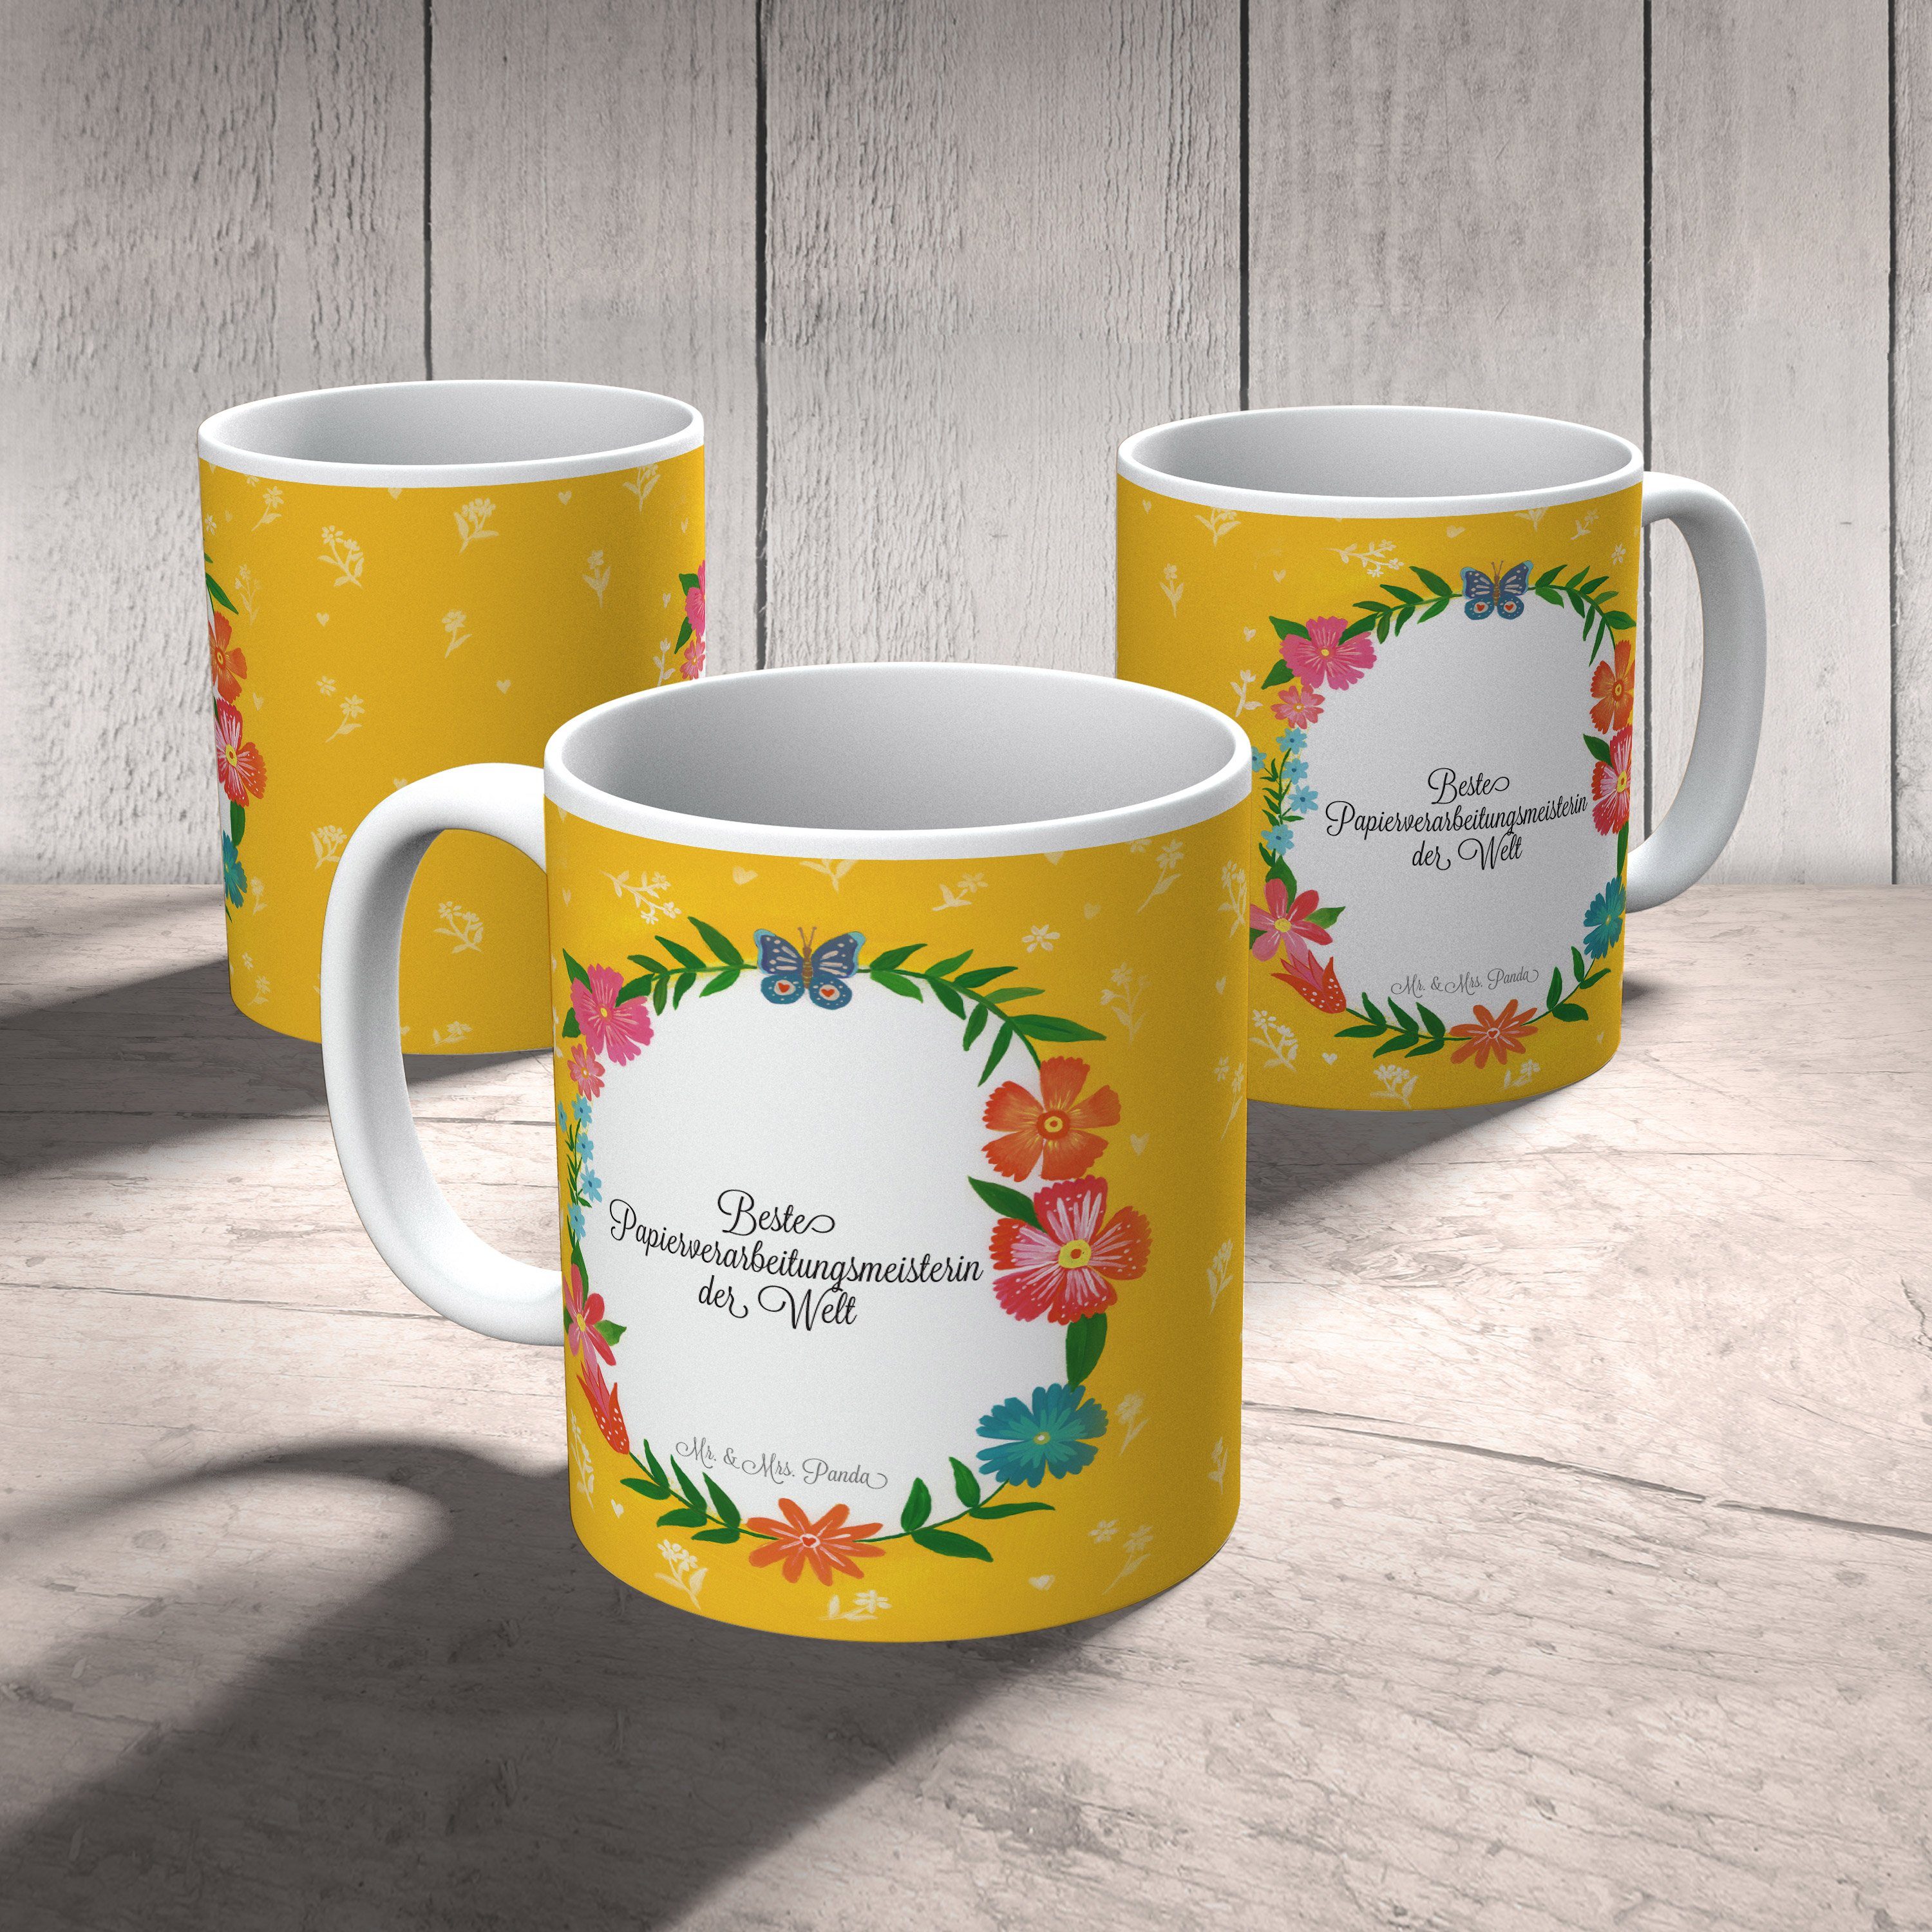 Mr. & Mrs. Panda A, - Motive, Tasse Kaffeetasse, Tasse Papierverarbeitungsmeisterin Geschenk, Keramik